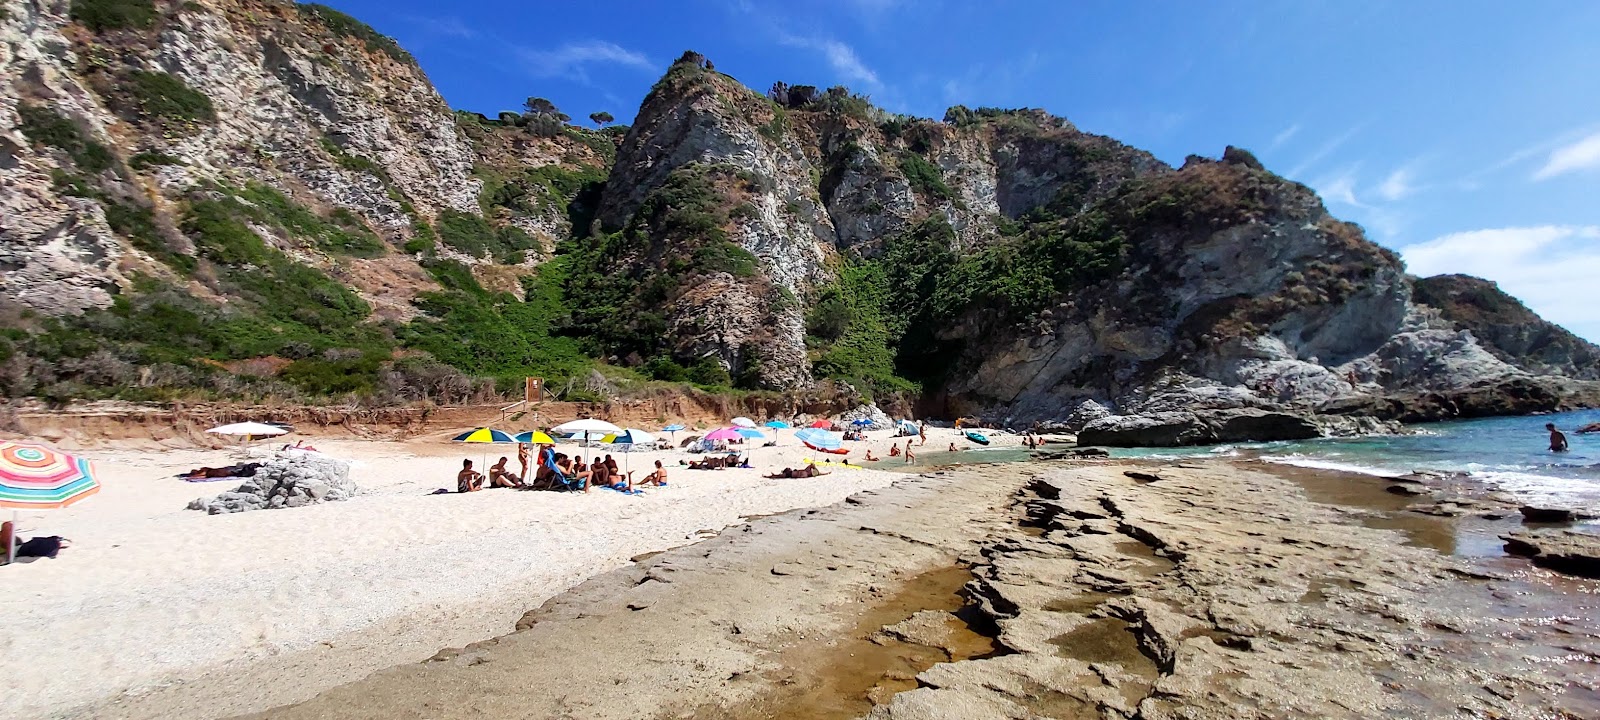 Photo of Praia I Focu beach backed by cliffs